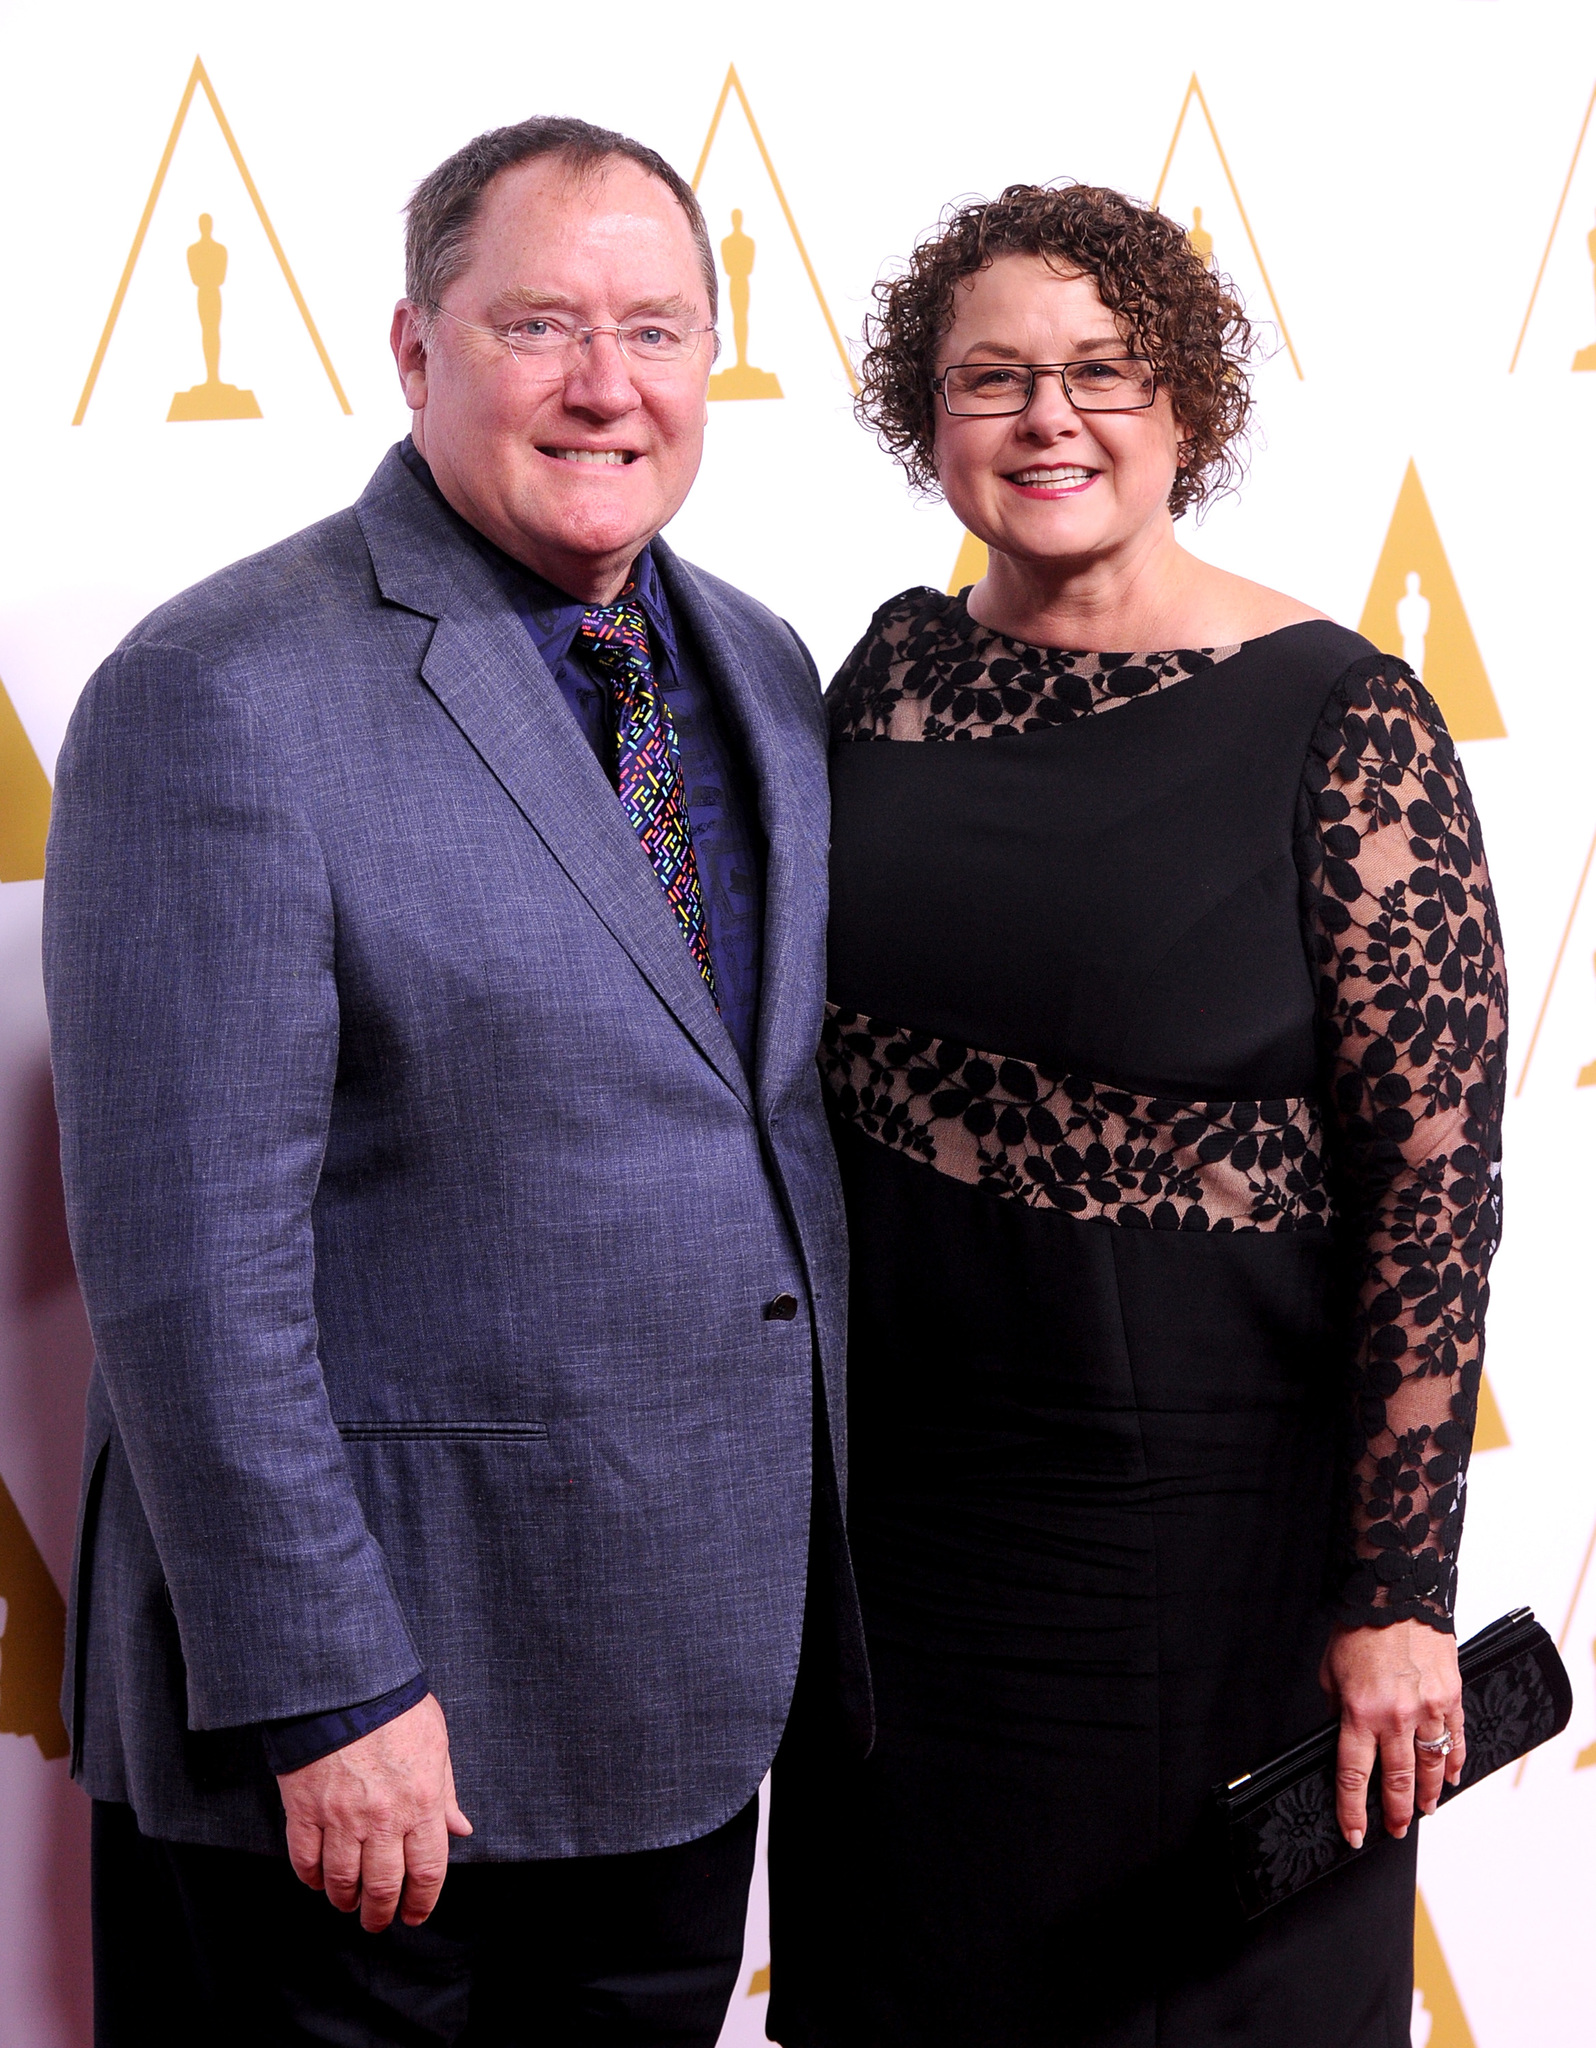 John Lasseter and Nancy Lasseter